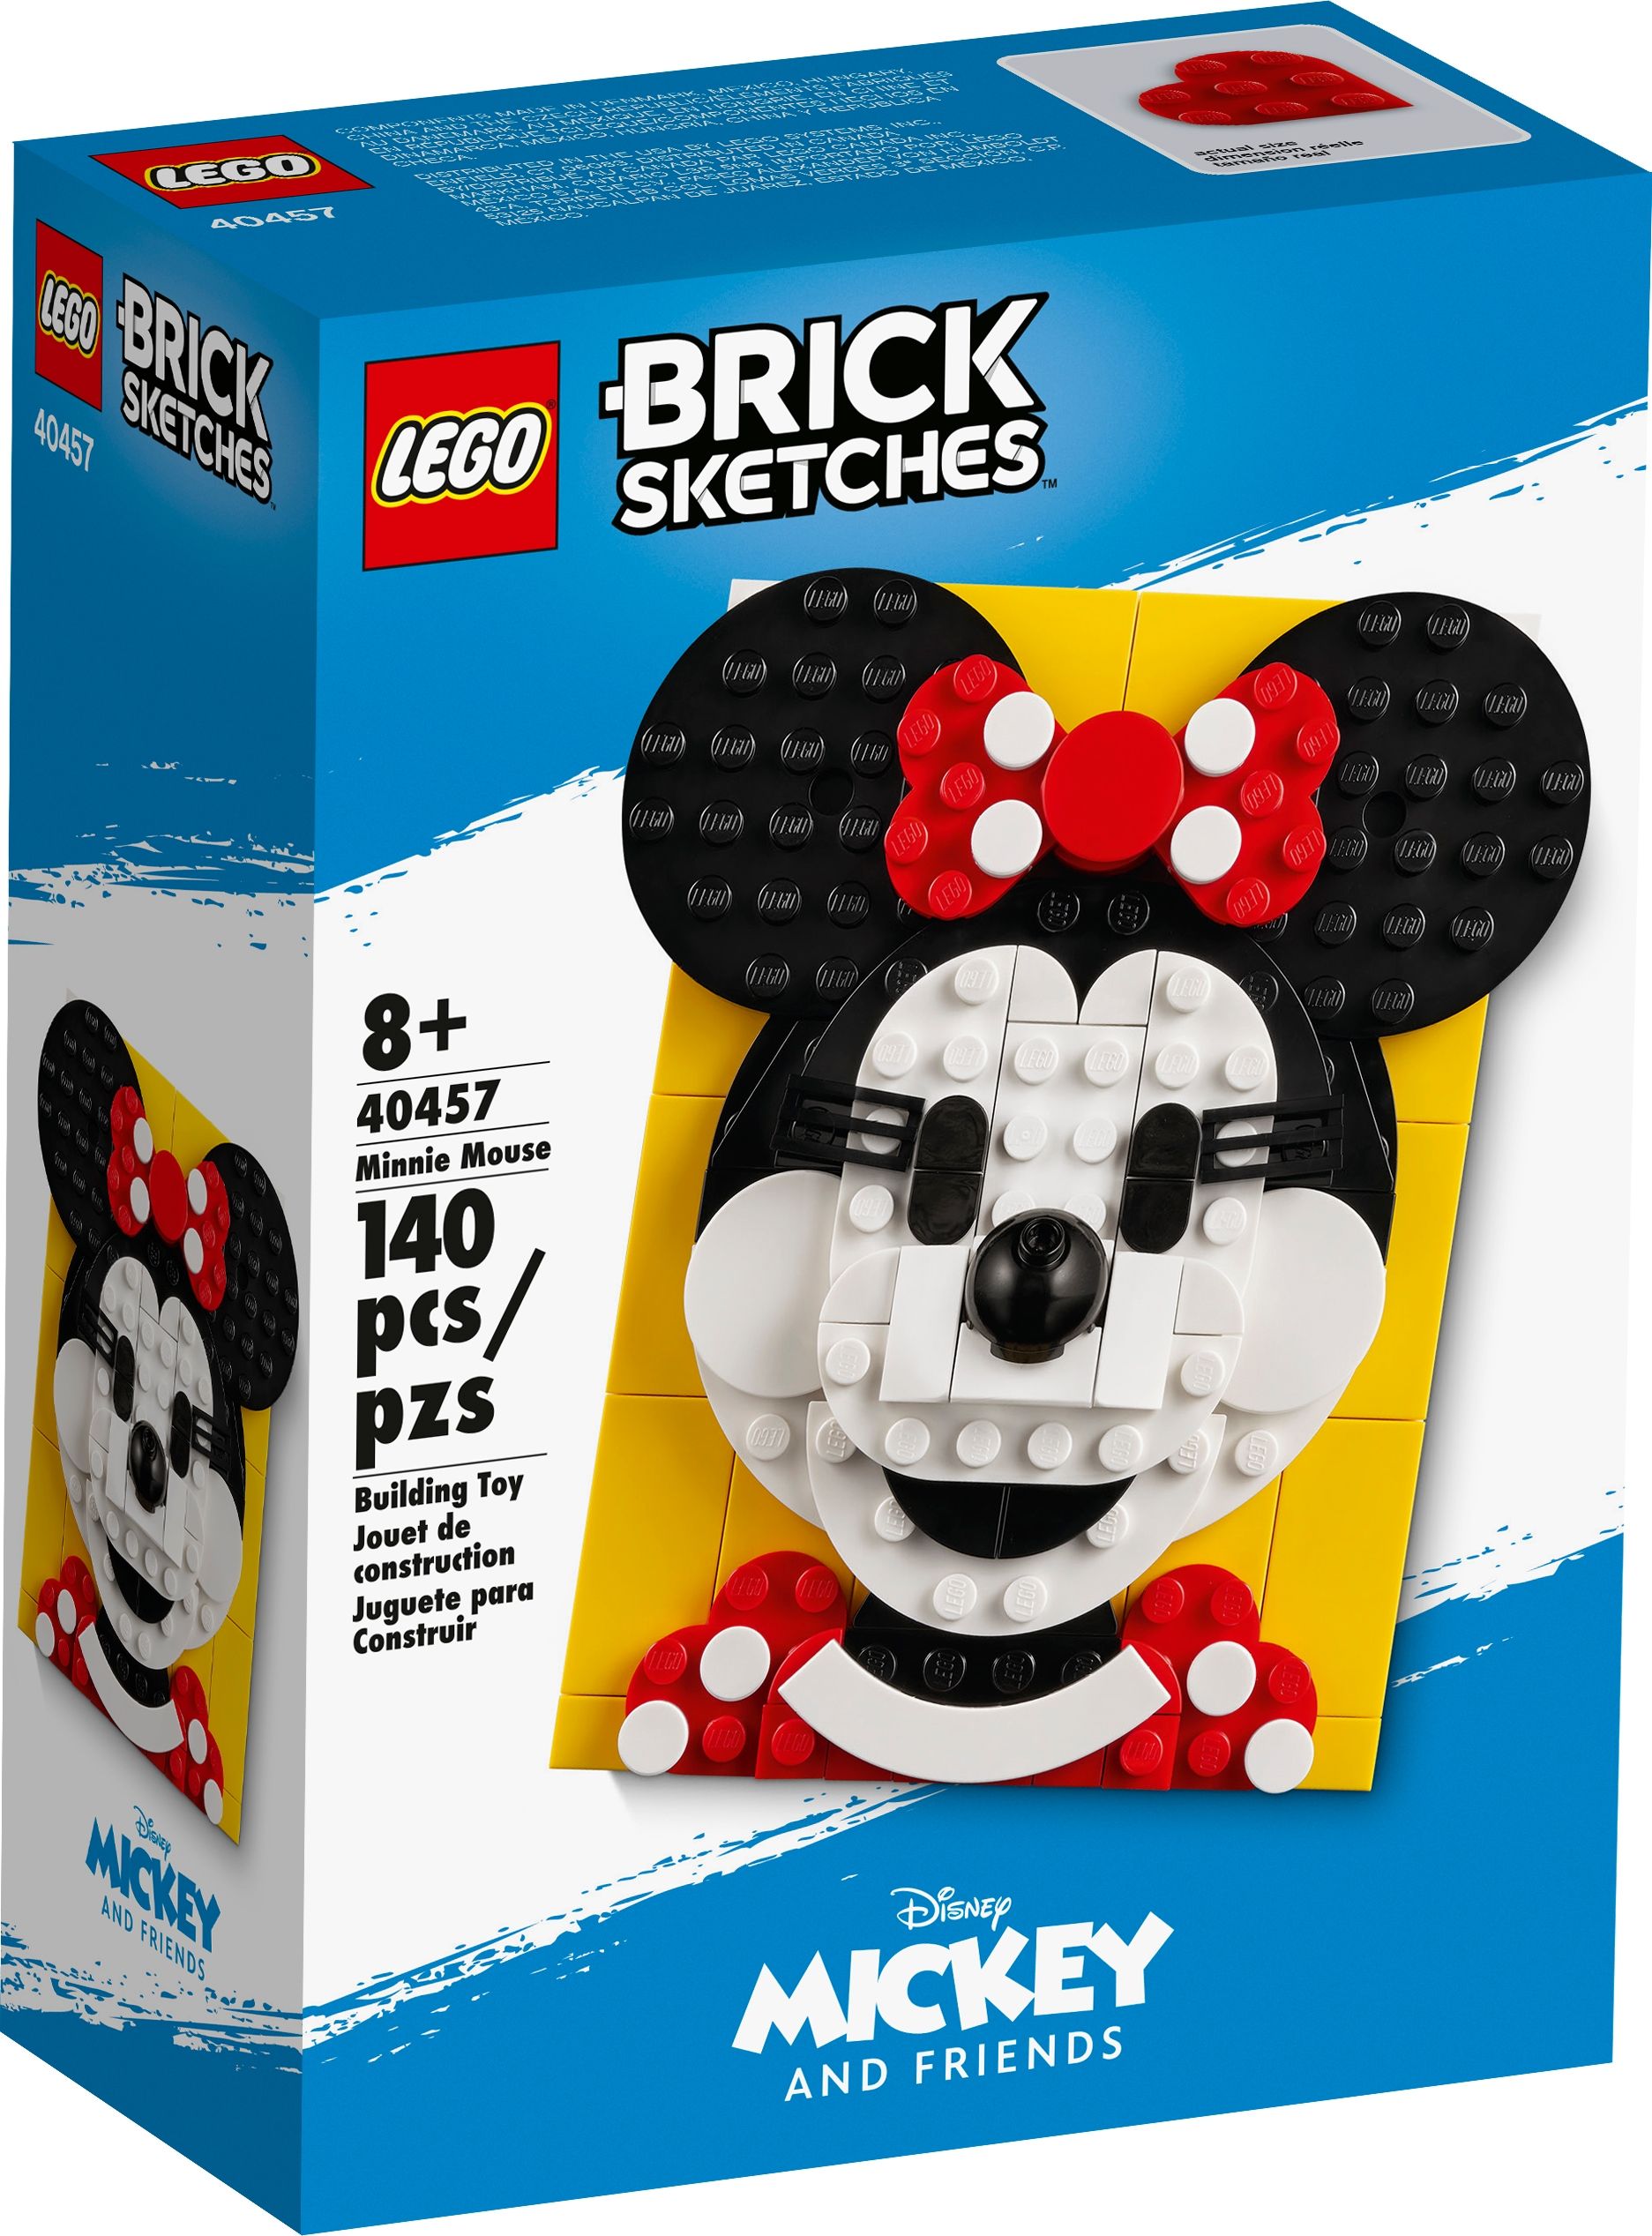 LEGO Brick Sketches 40457 Minnie Maus LEGO_40457_box1_v39.jpg